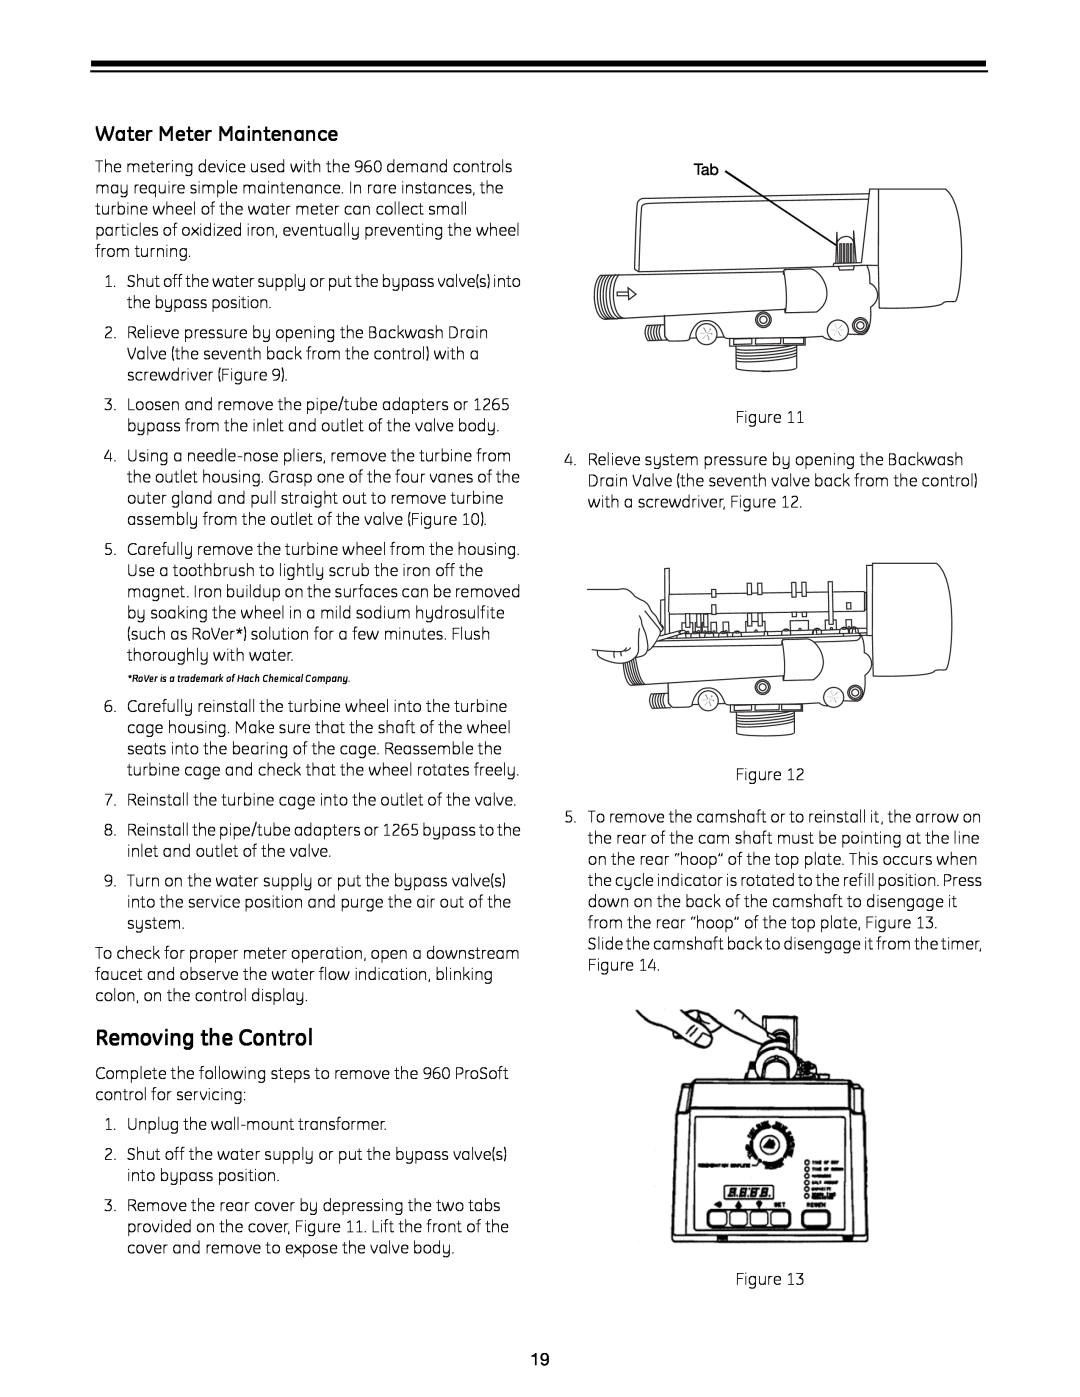 GE 960 Series manual Removing the Control, Water Meter Maintenance 